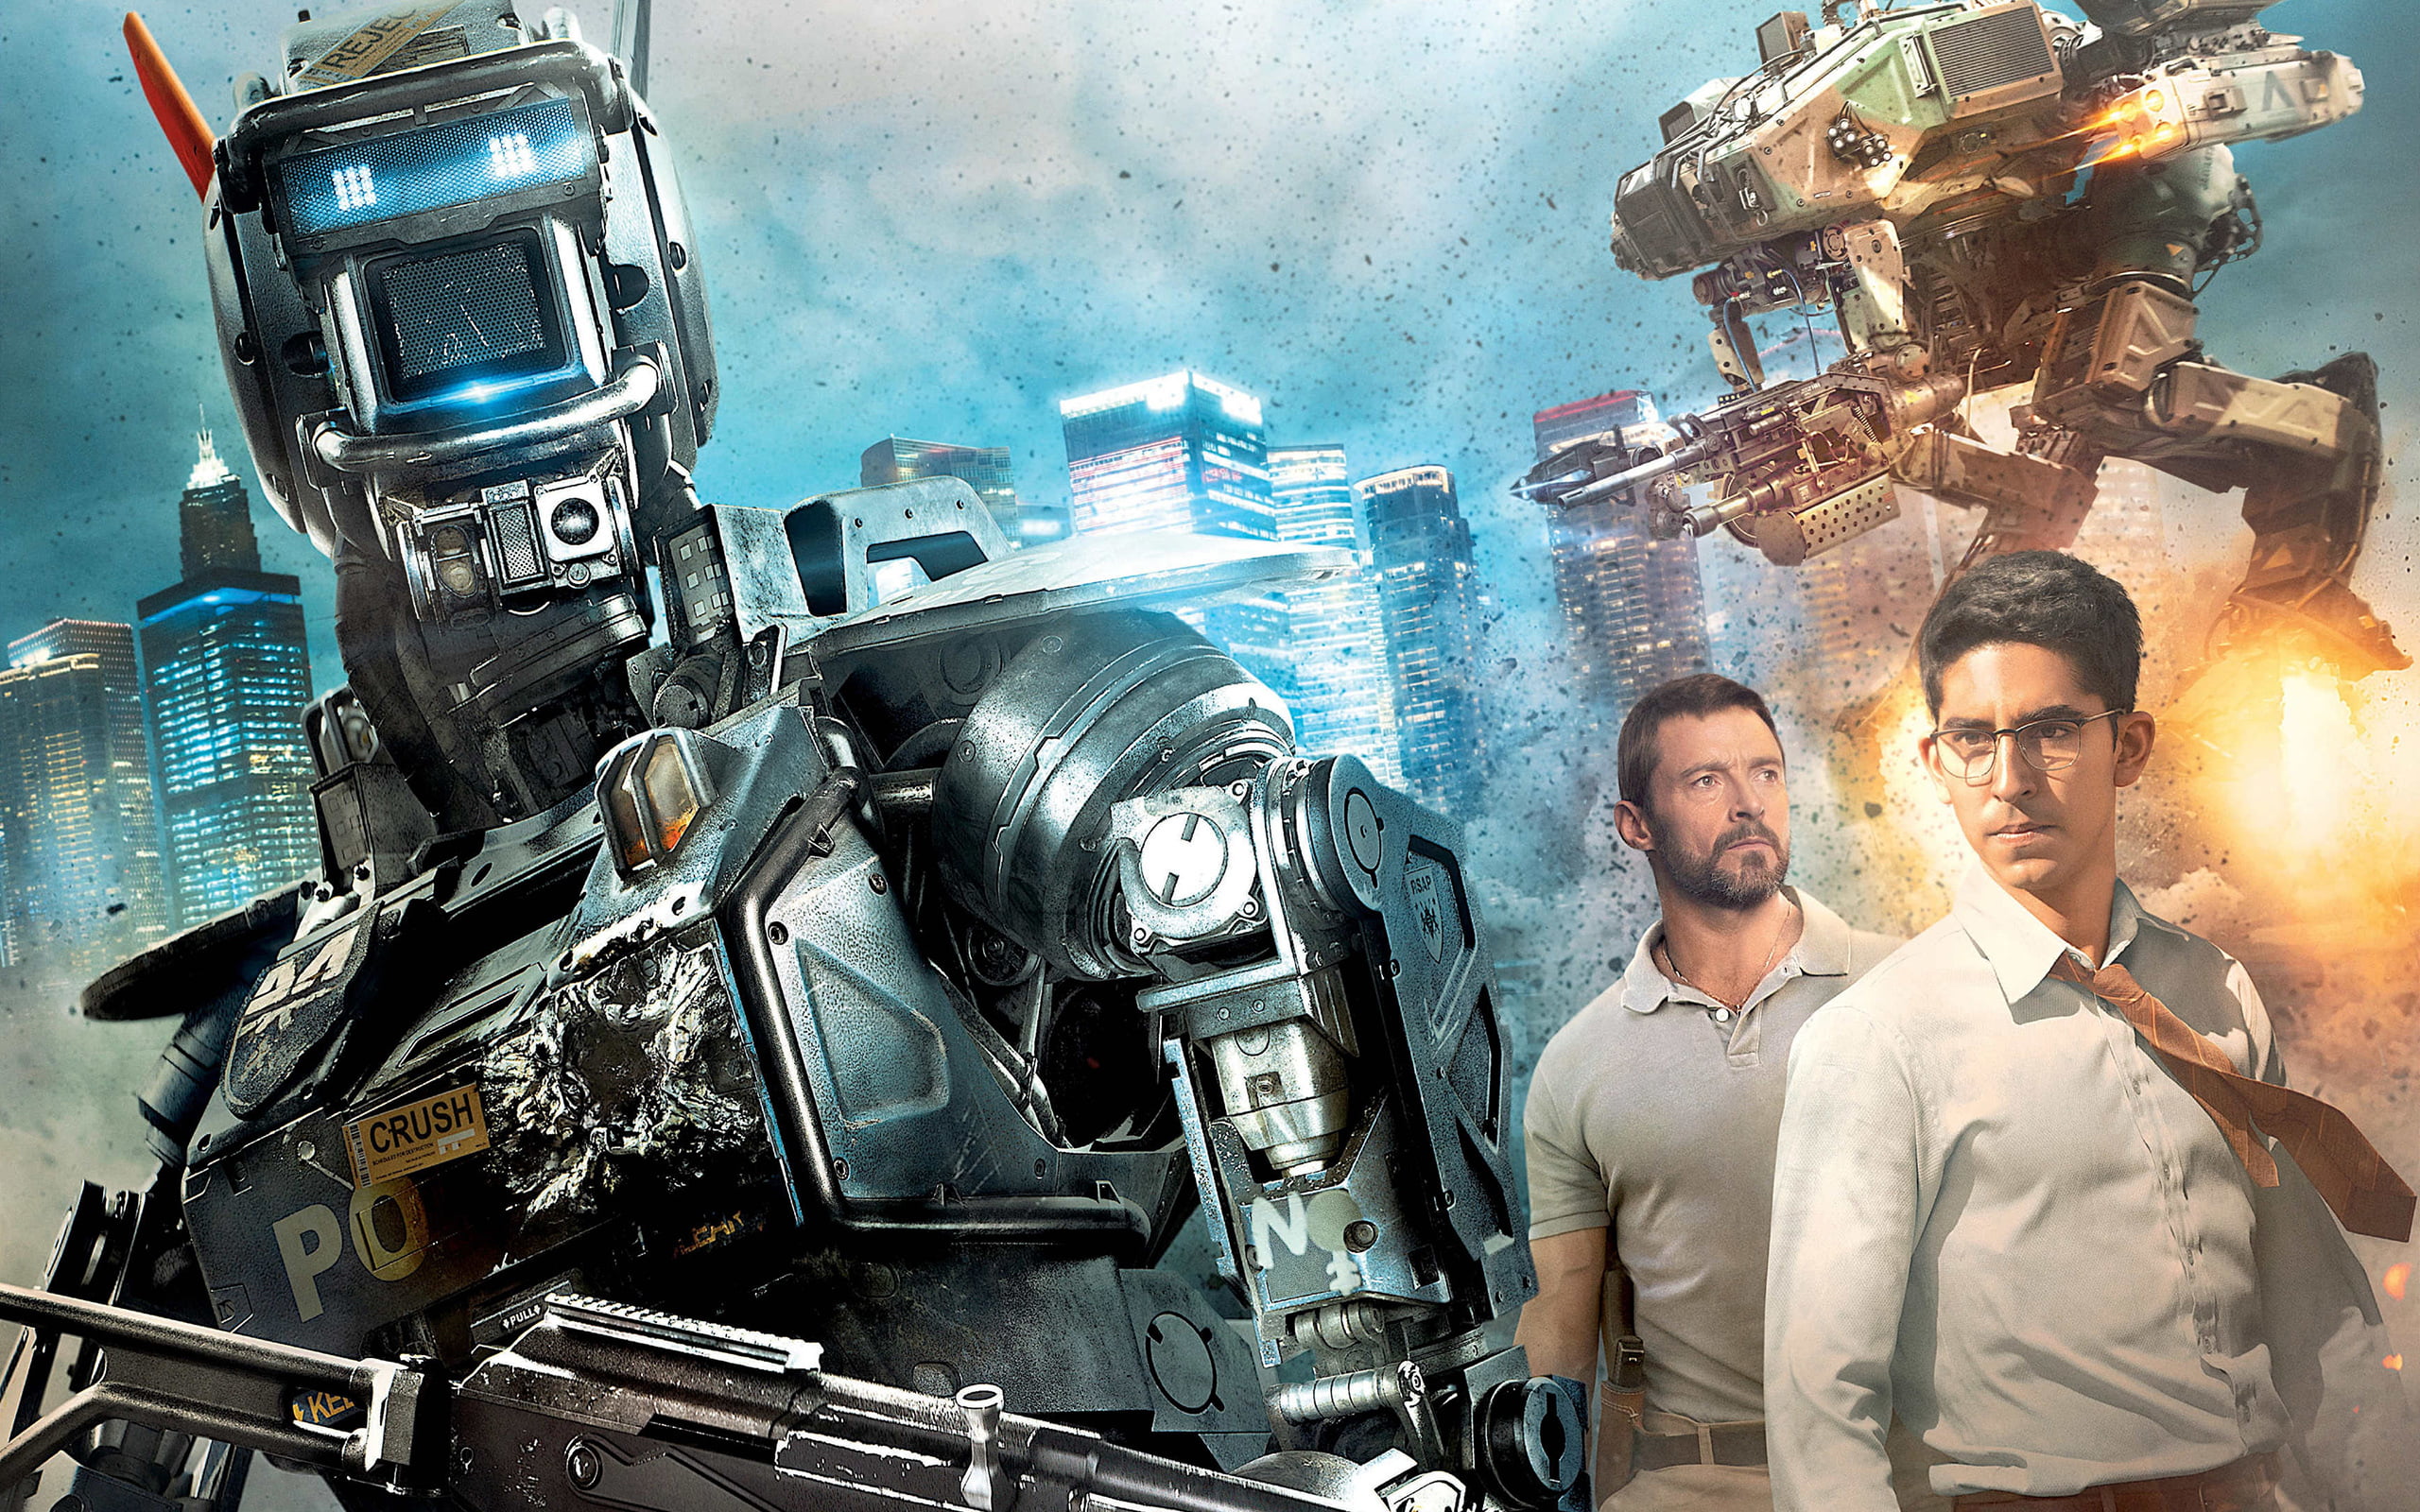 movie poster, weapons, robots, shooting, Hugh Jackman, Chappie